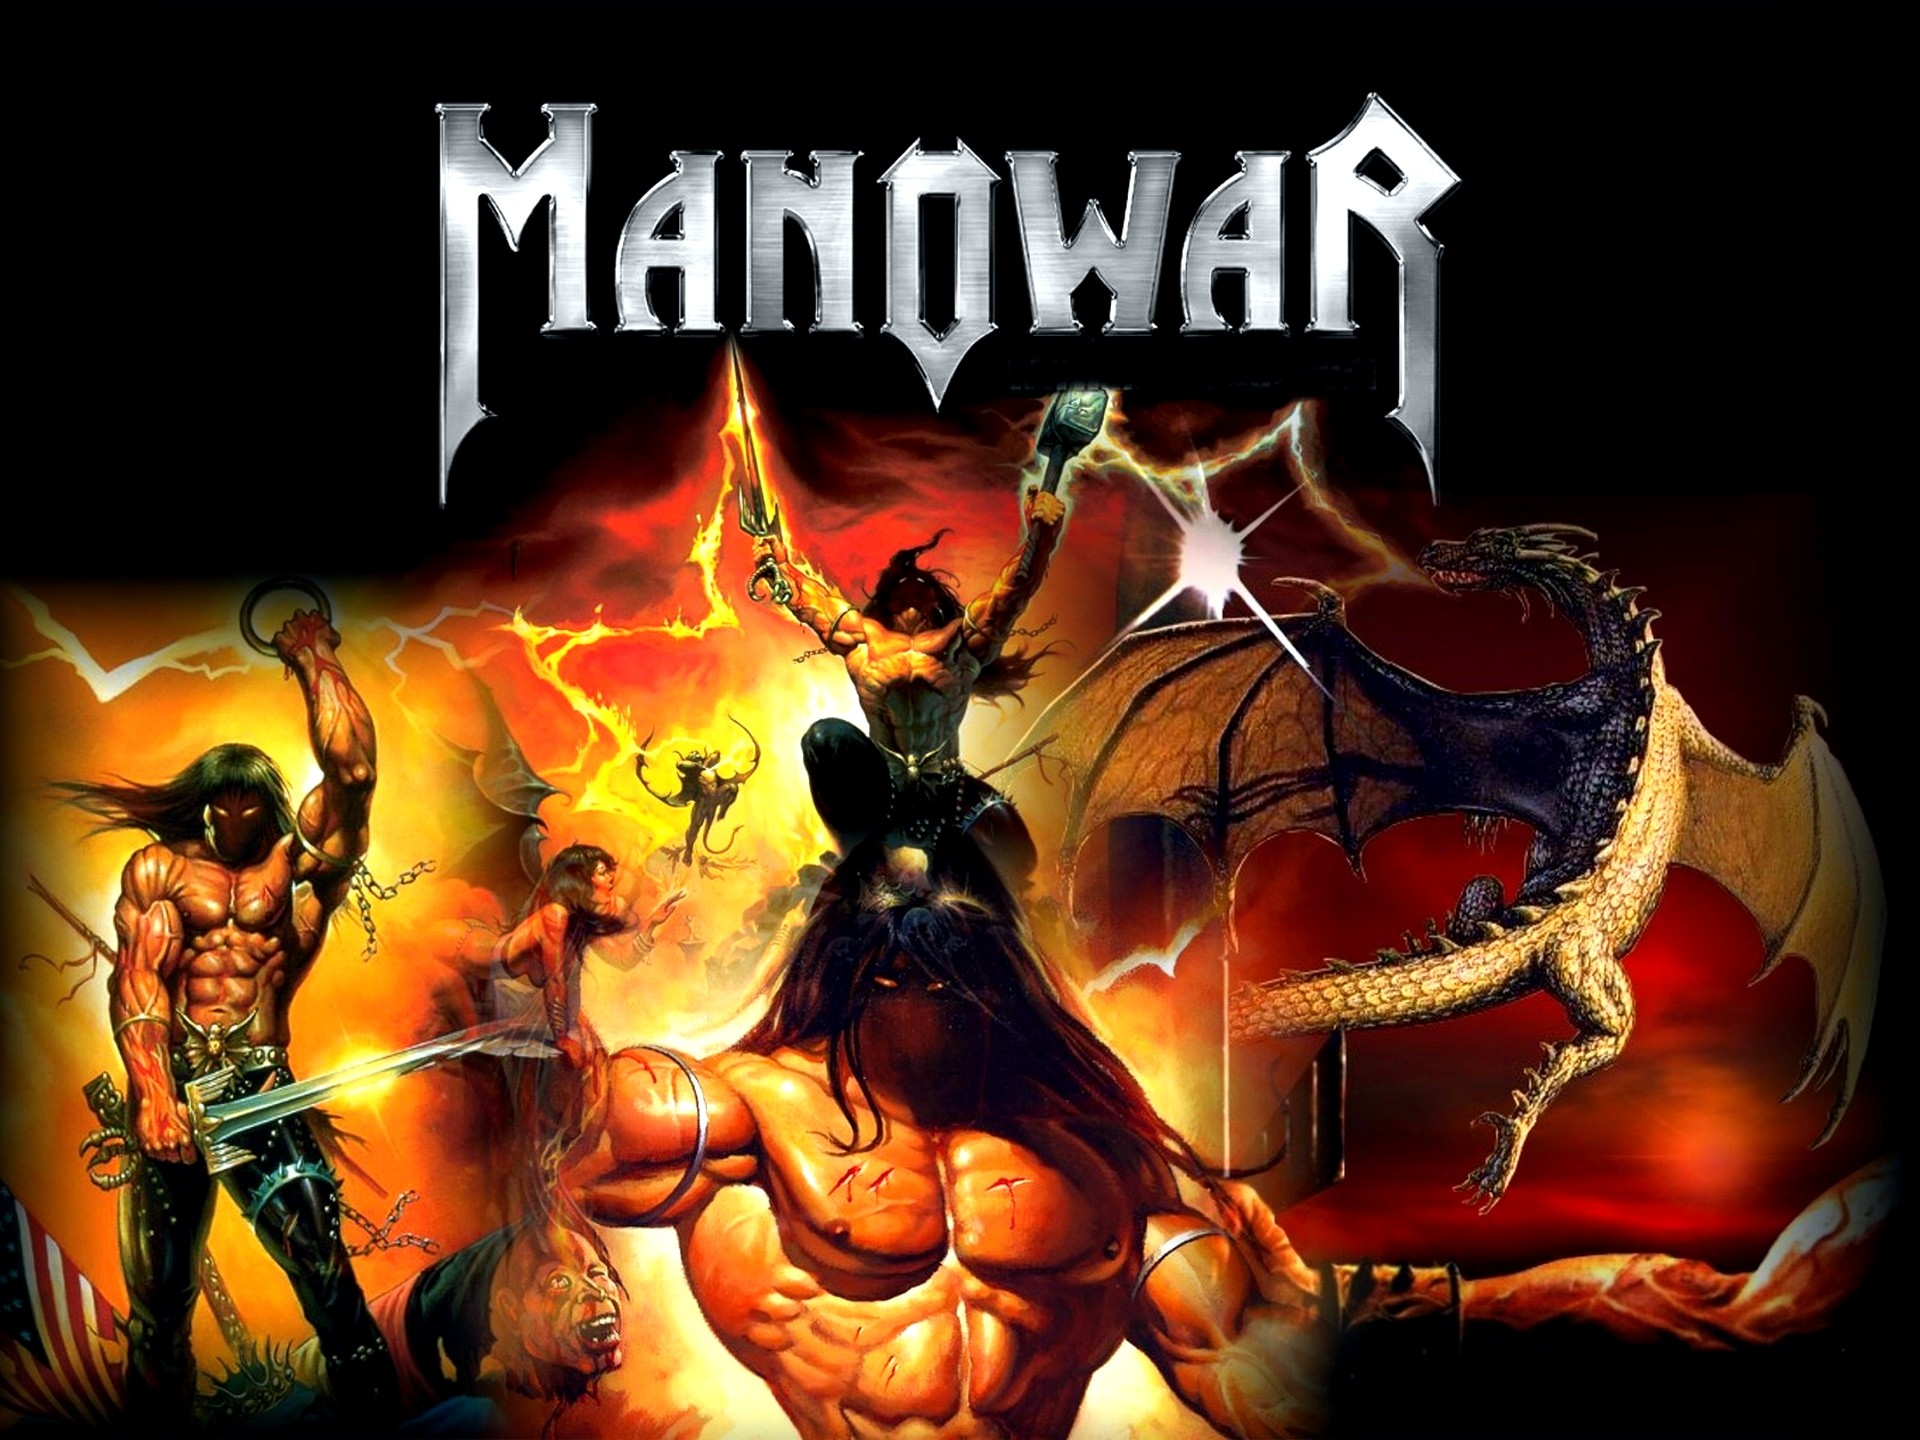 Manowar fight. Группа Manowar иллюстрации. Группа Manowar 2021. Постеры группы Manowar. Плакаты группы мановар.